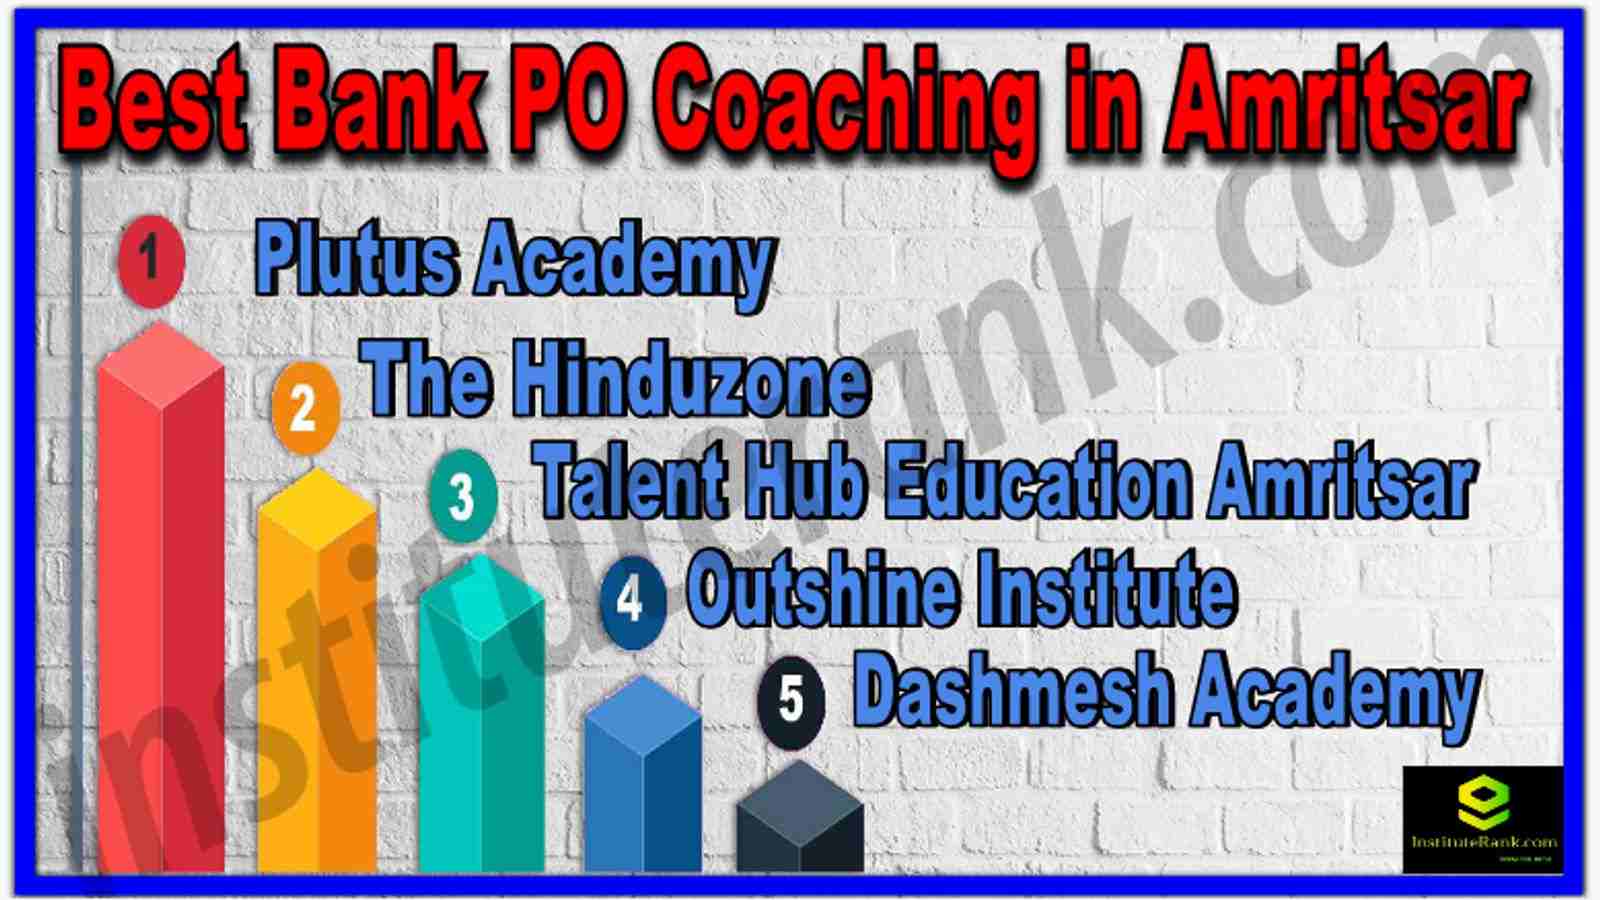 Best Bank PO Coaching in Amritsar